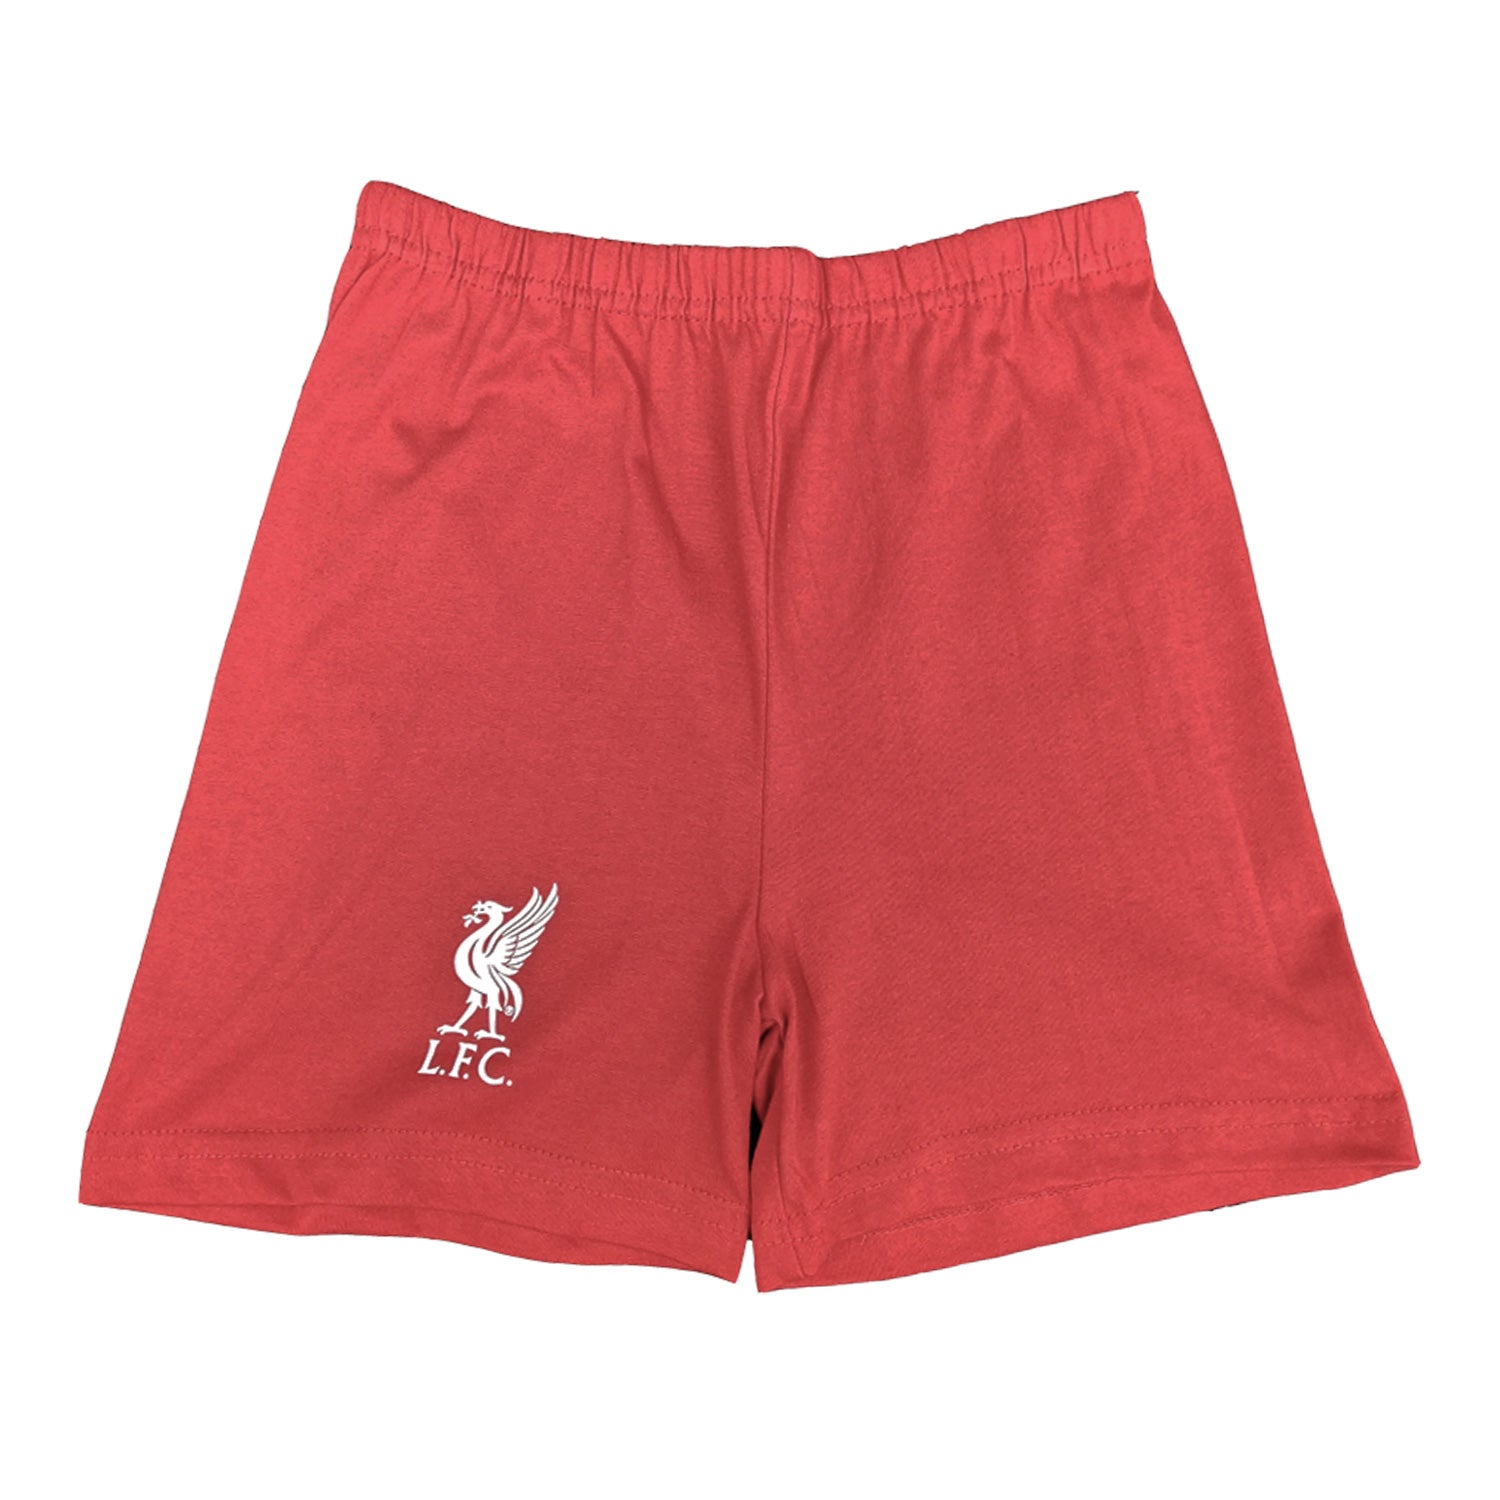 Kids Liverpool Football Club Short Pyjamas Set Shorts